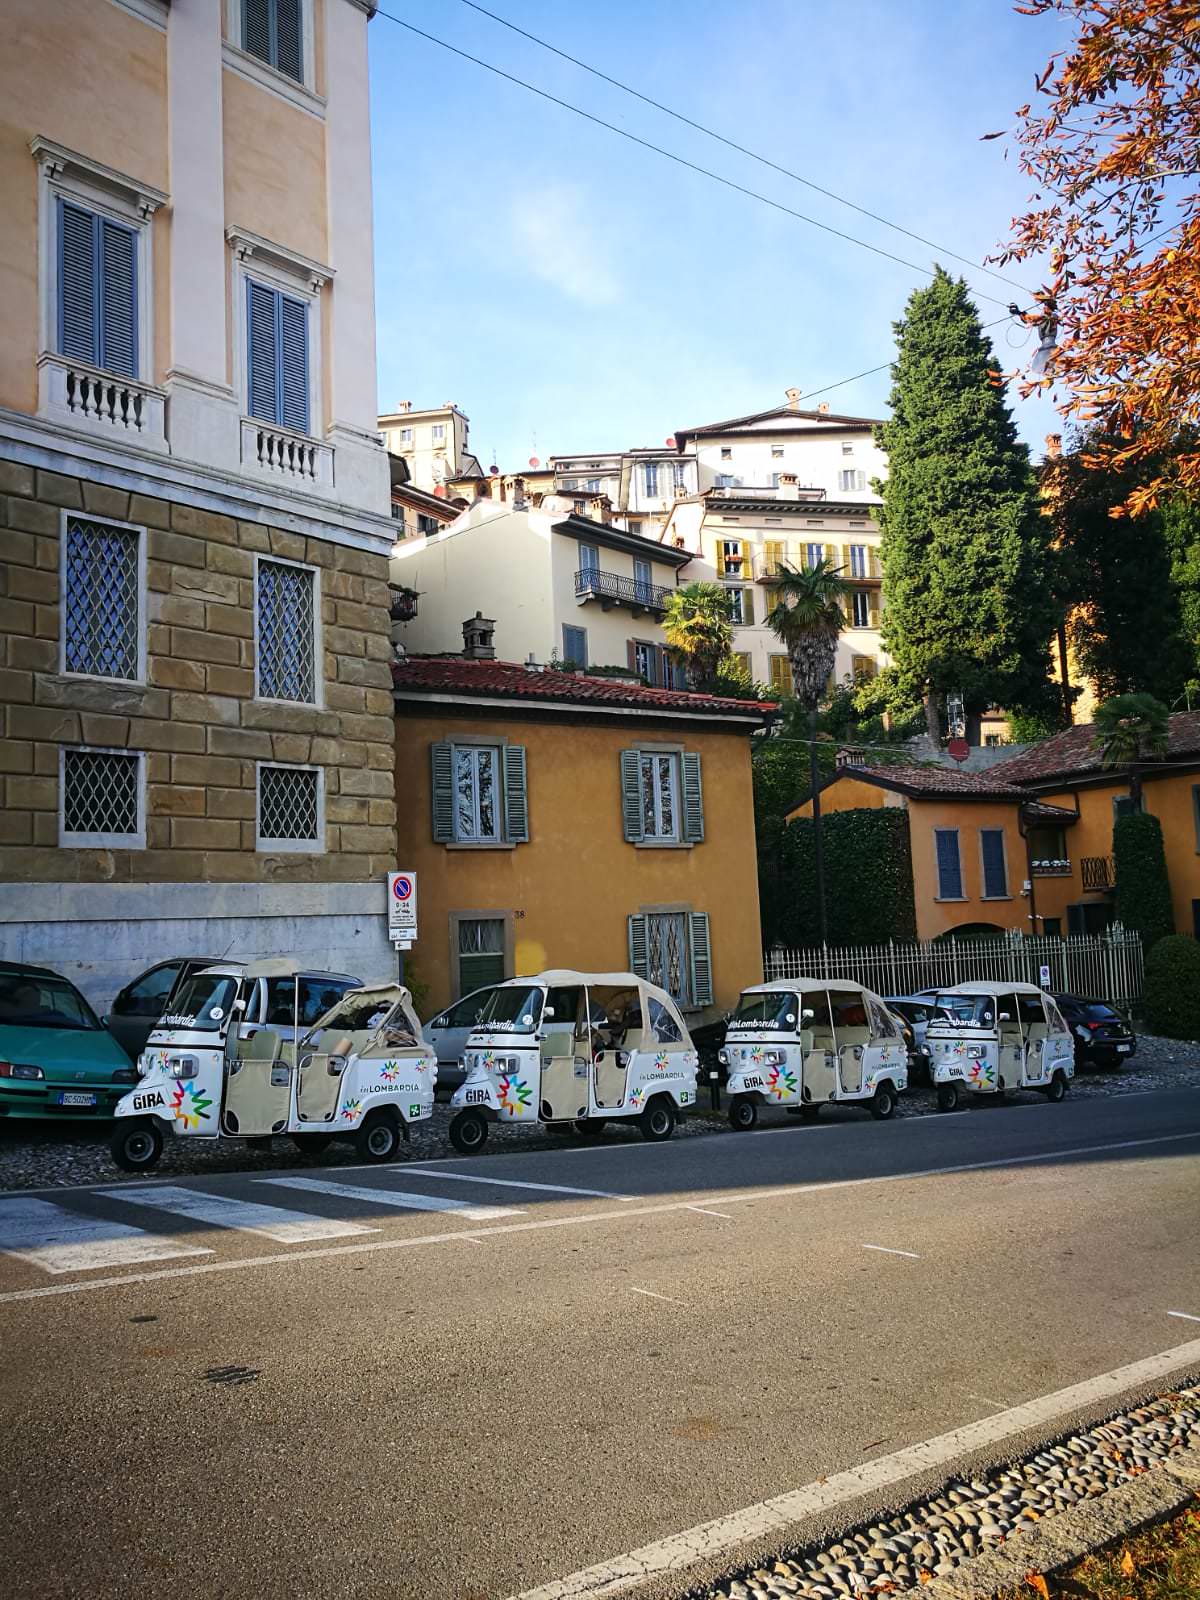 Roadtrip around Lombardy, Region in North Italy - Tuktuk in Lombar